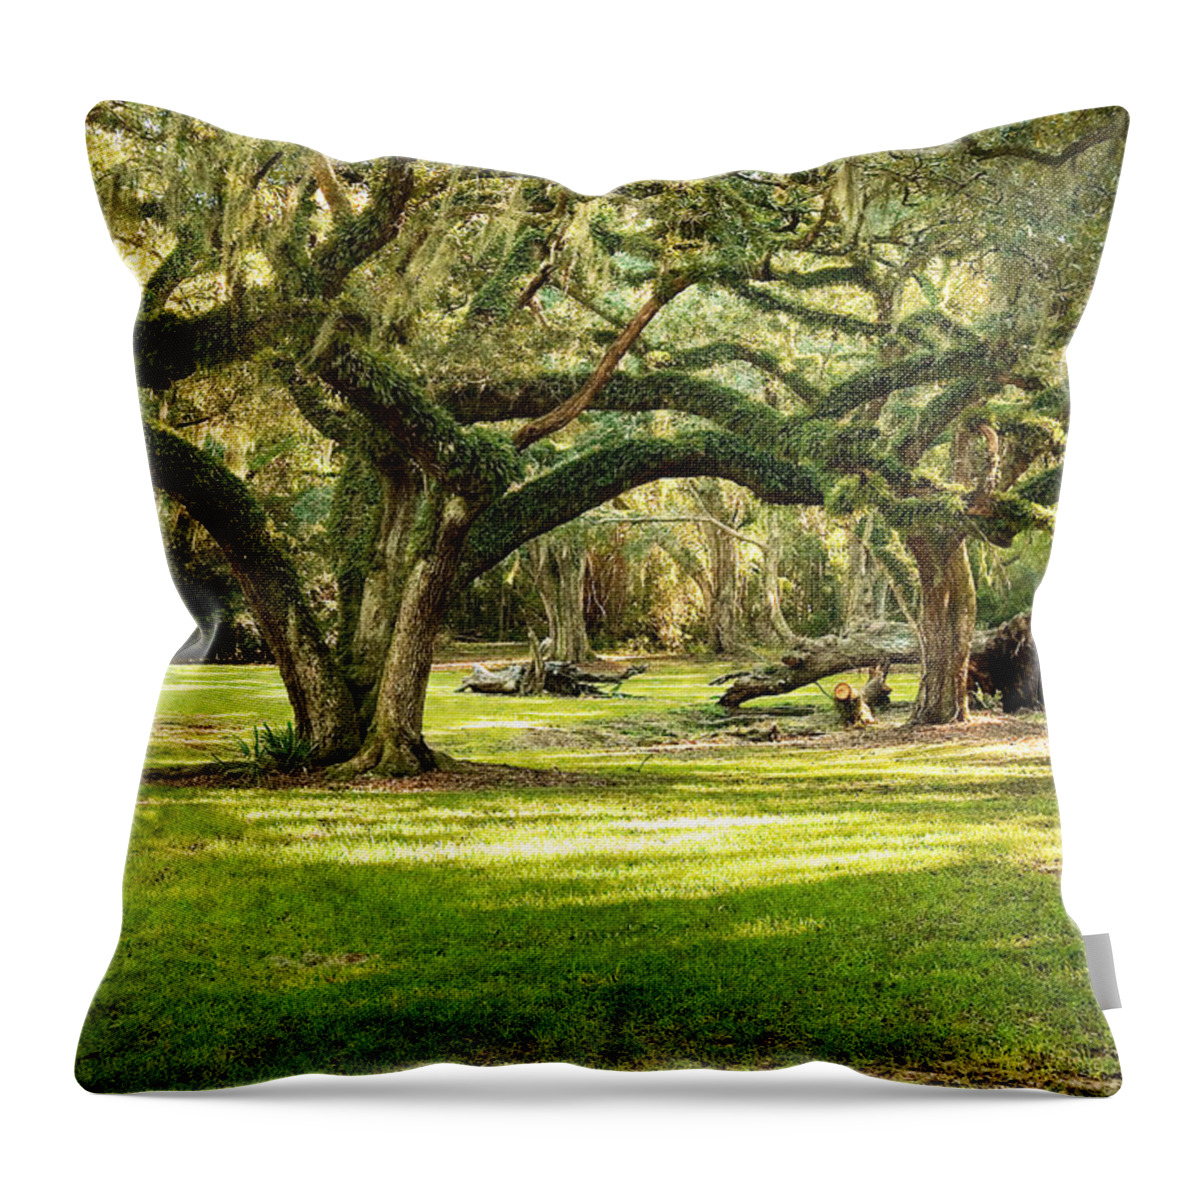 Oak Trees Throw Pillow featuring the photograph Avery Island Oaks by Scott Pellegrin